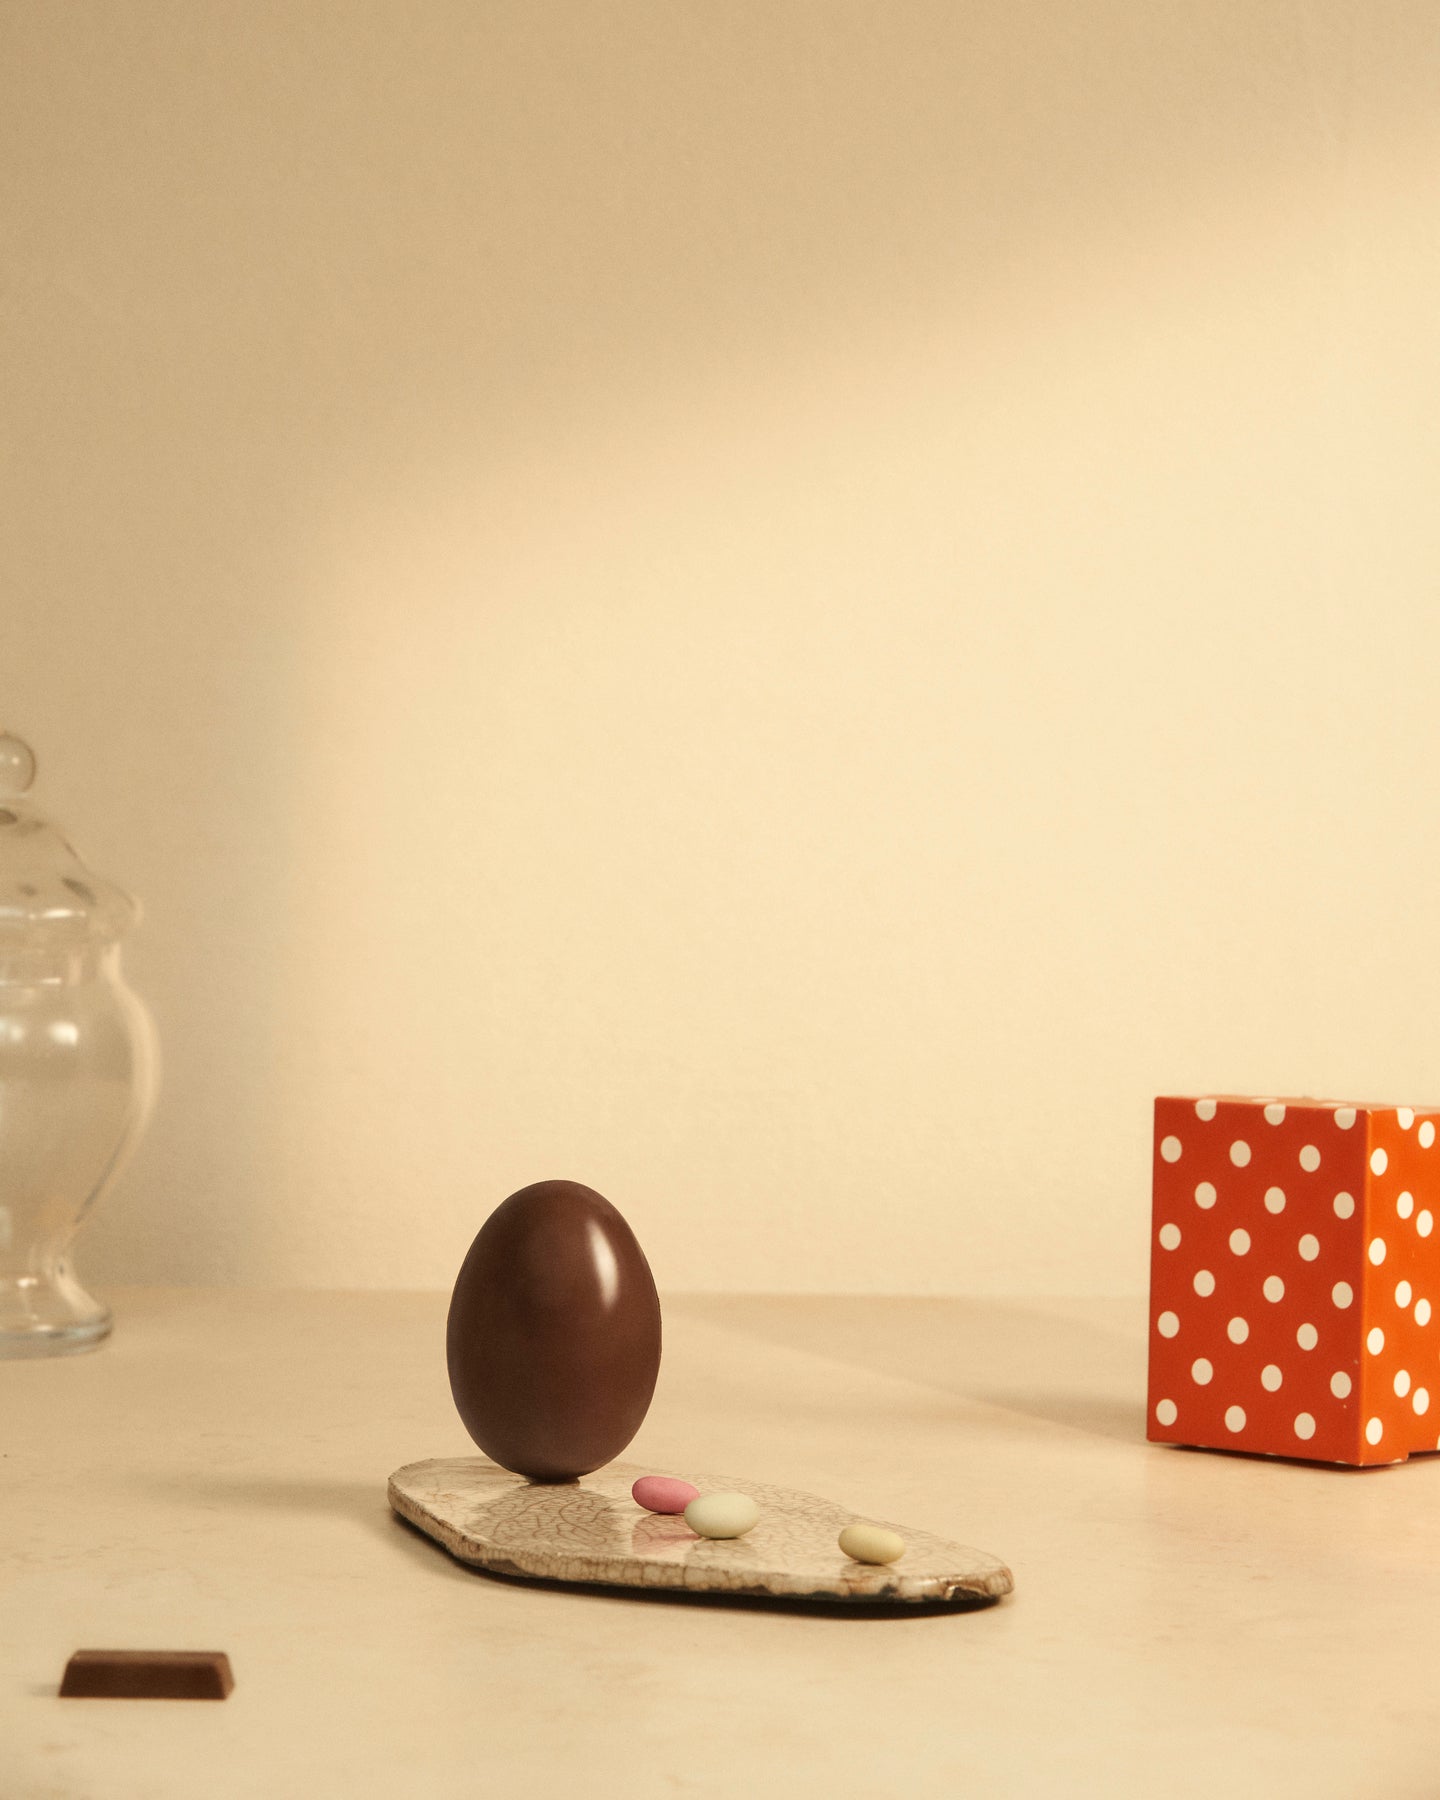 Dark Chocolate Eggs 64% with Polka Dot Box